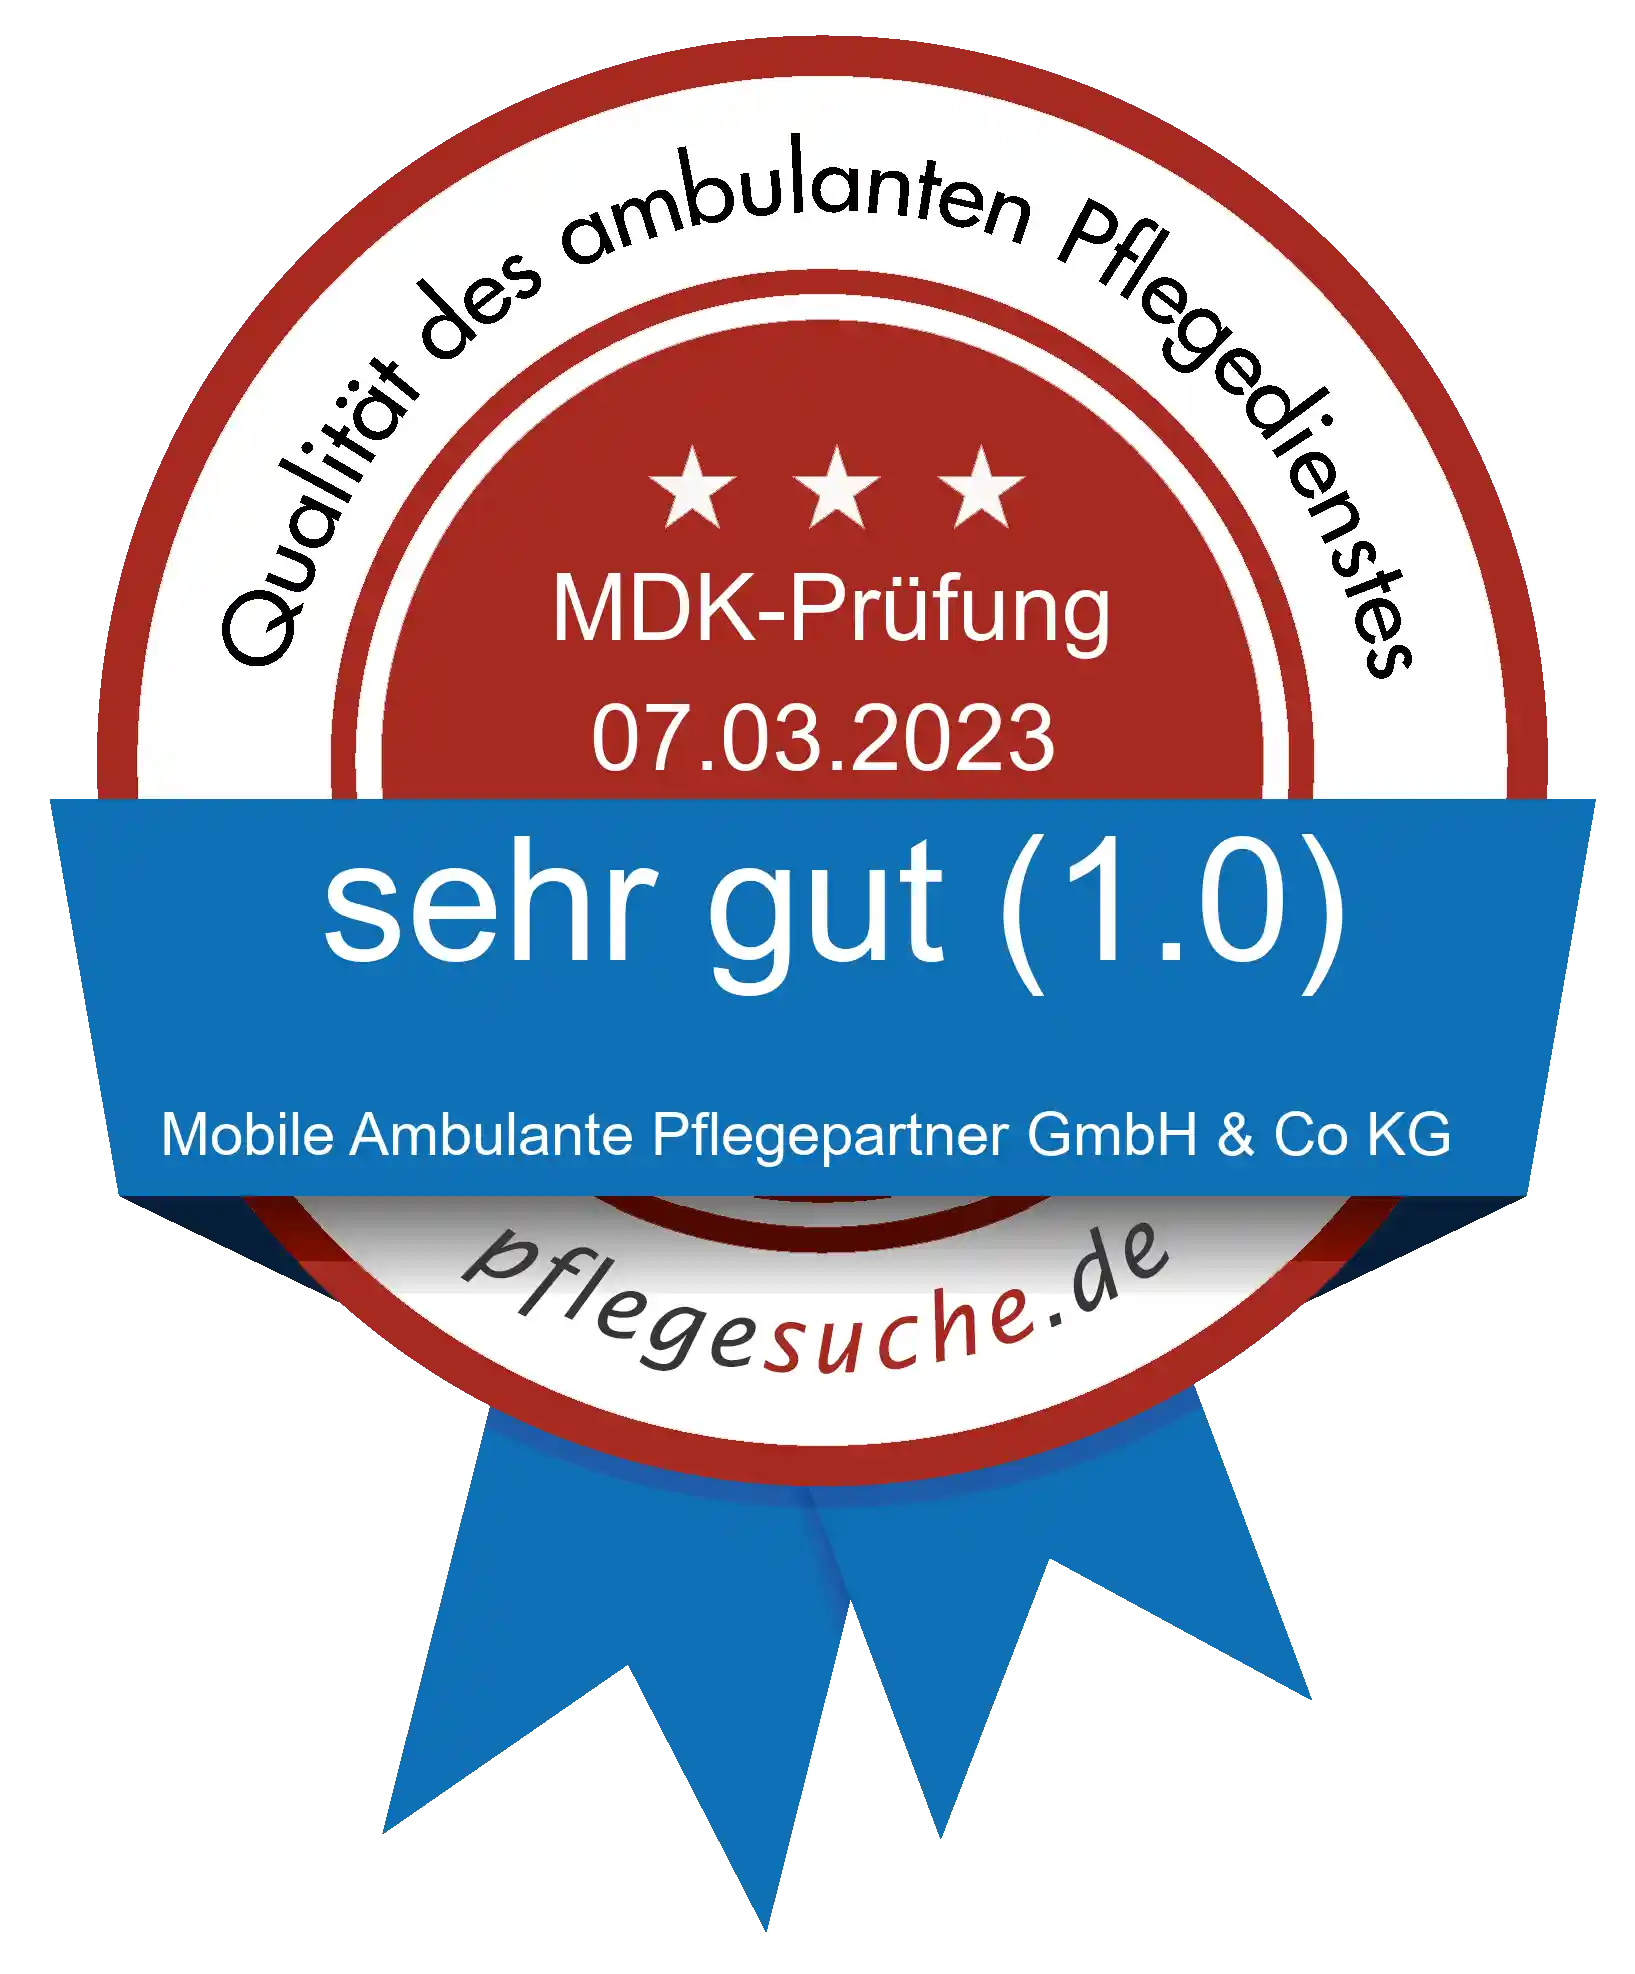 Siegel Benotung: Mobile Ambulante Pflegepartner GmbH & Co KG